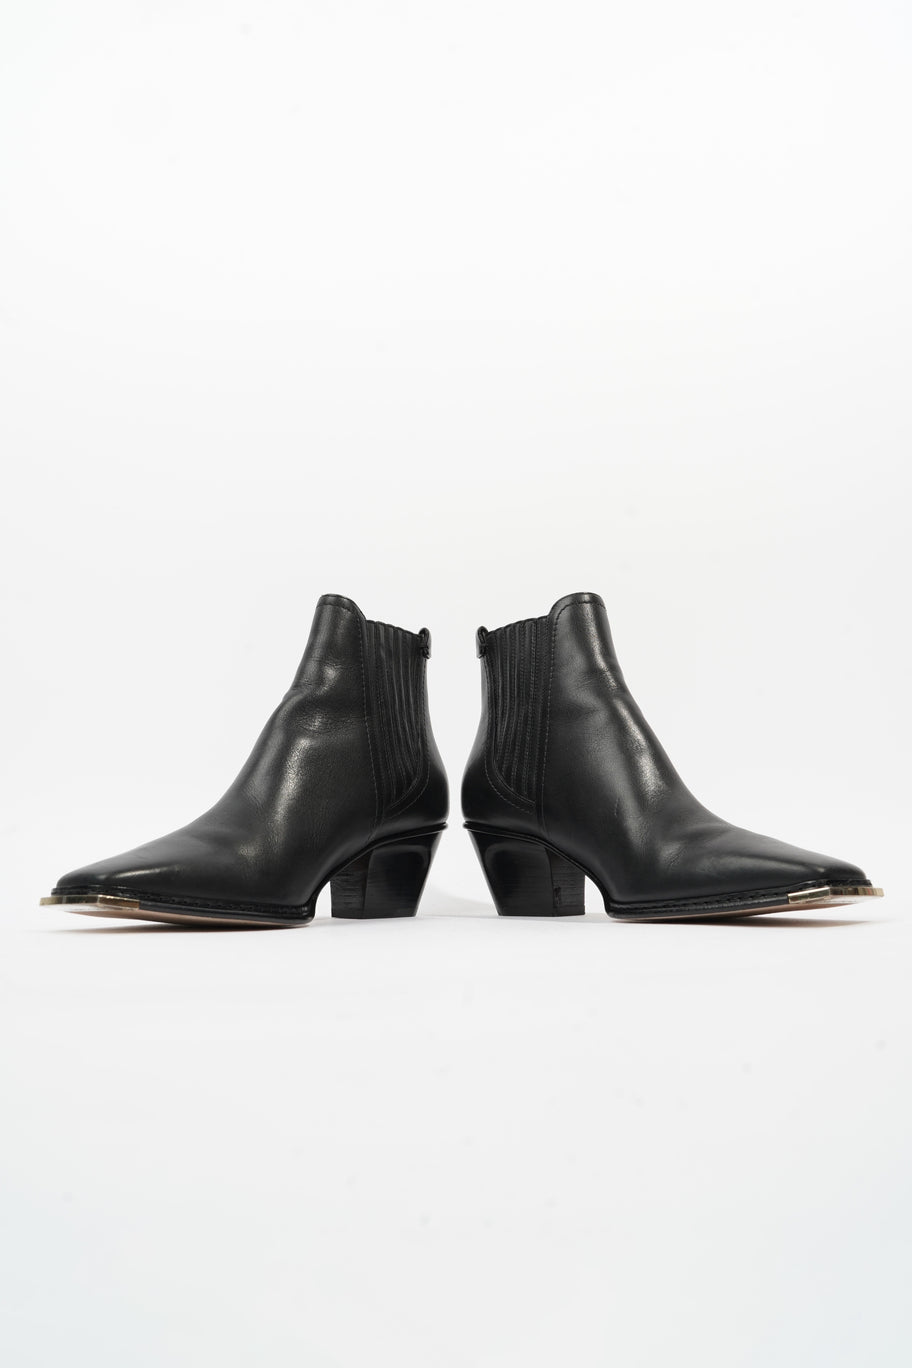 Square Toe Ankle Boots Black Leather EU 38 UK 5 Image 10